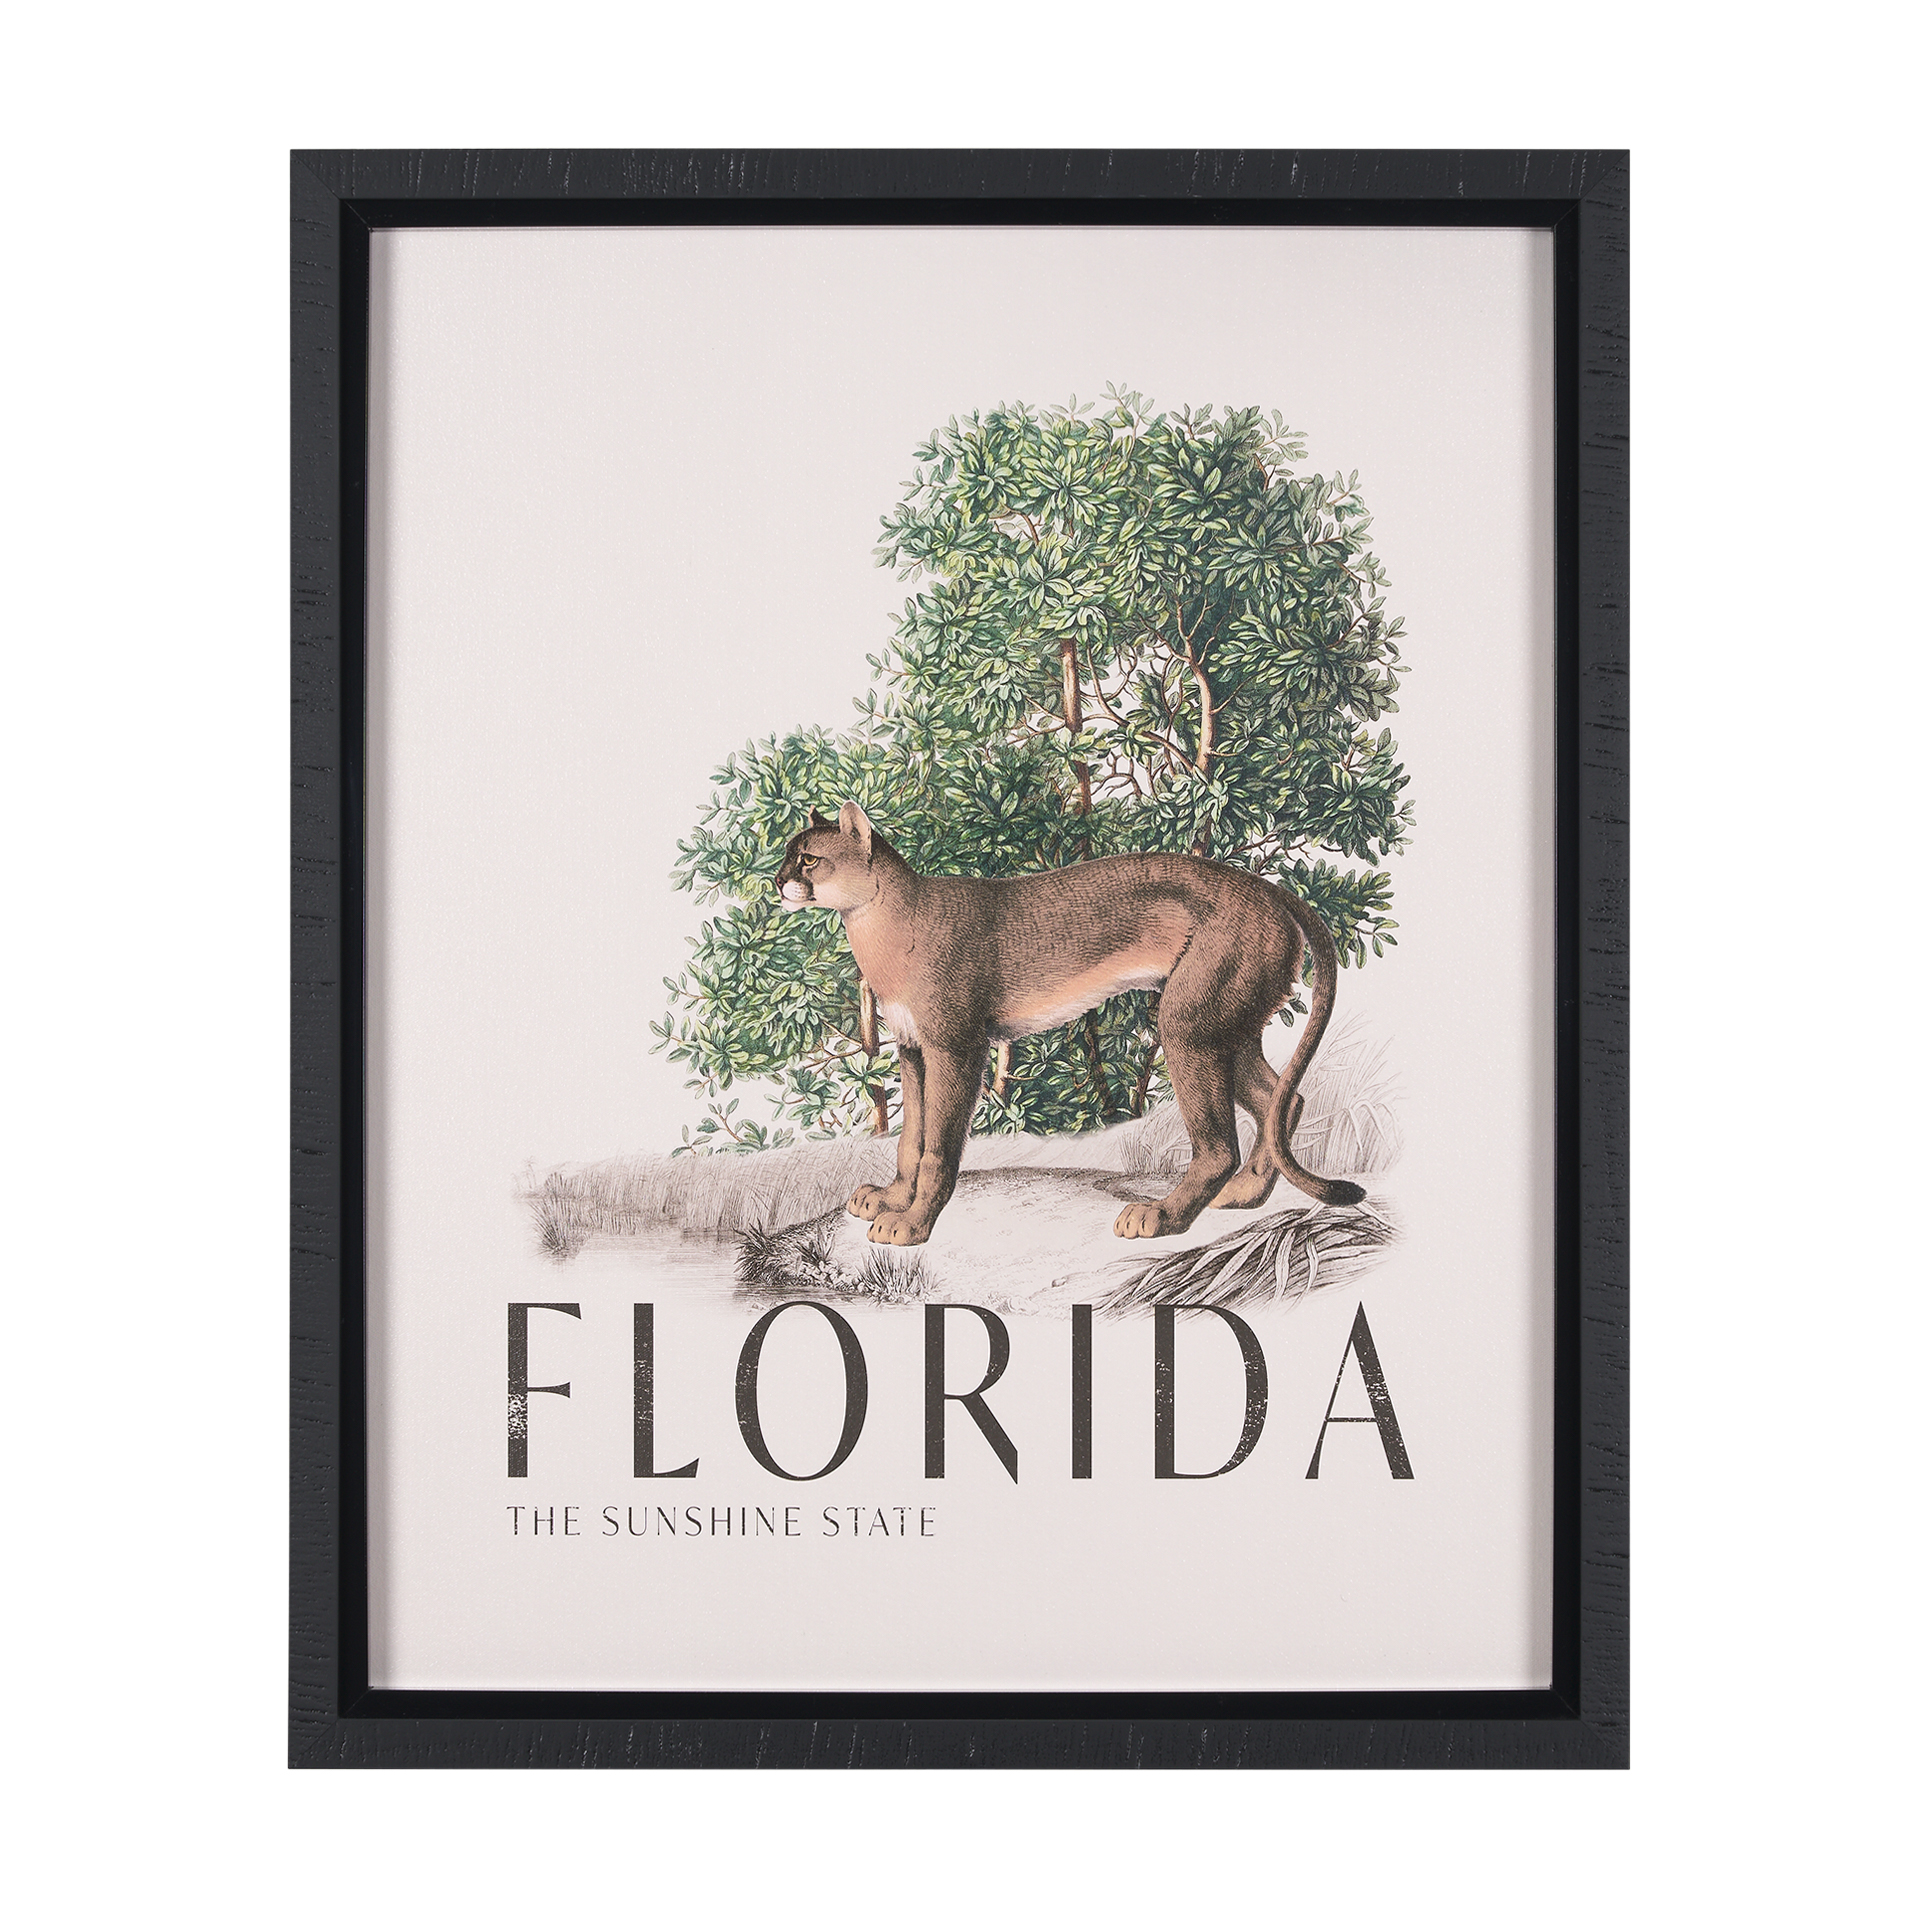 Travel Guide - Florida (26 x 32)